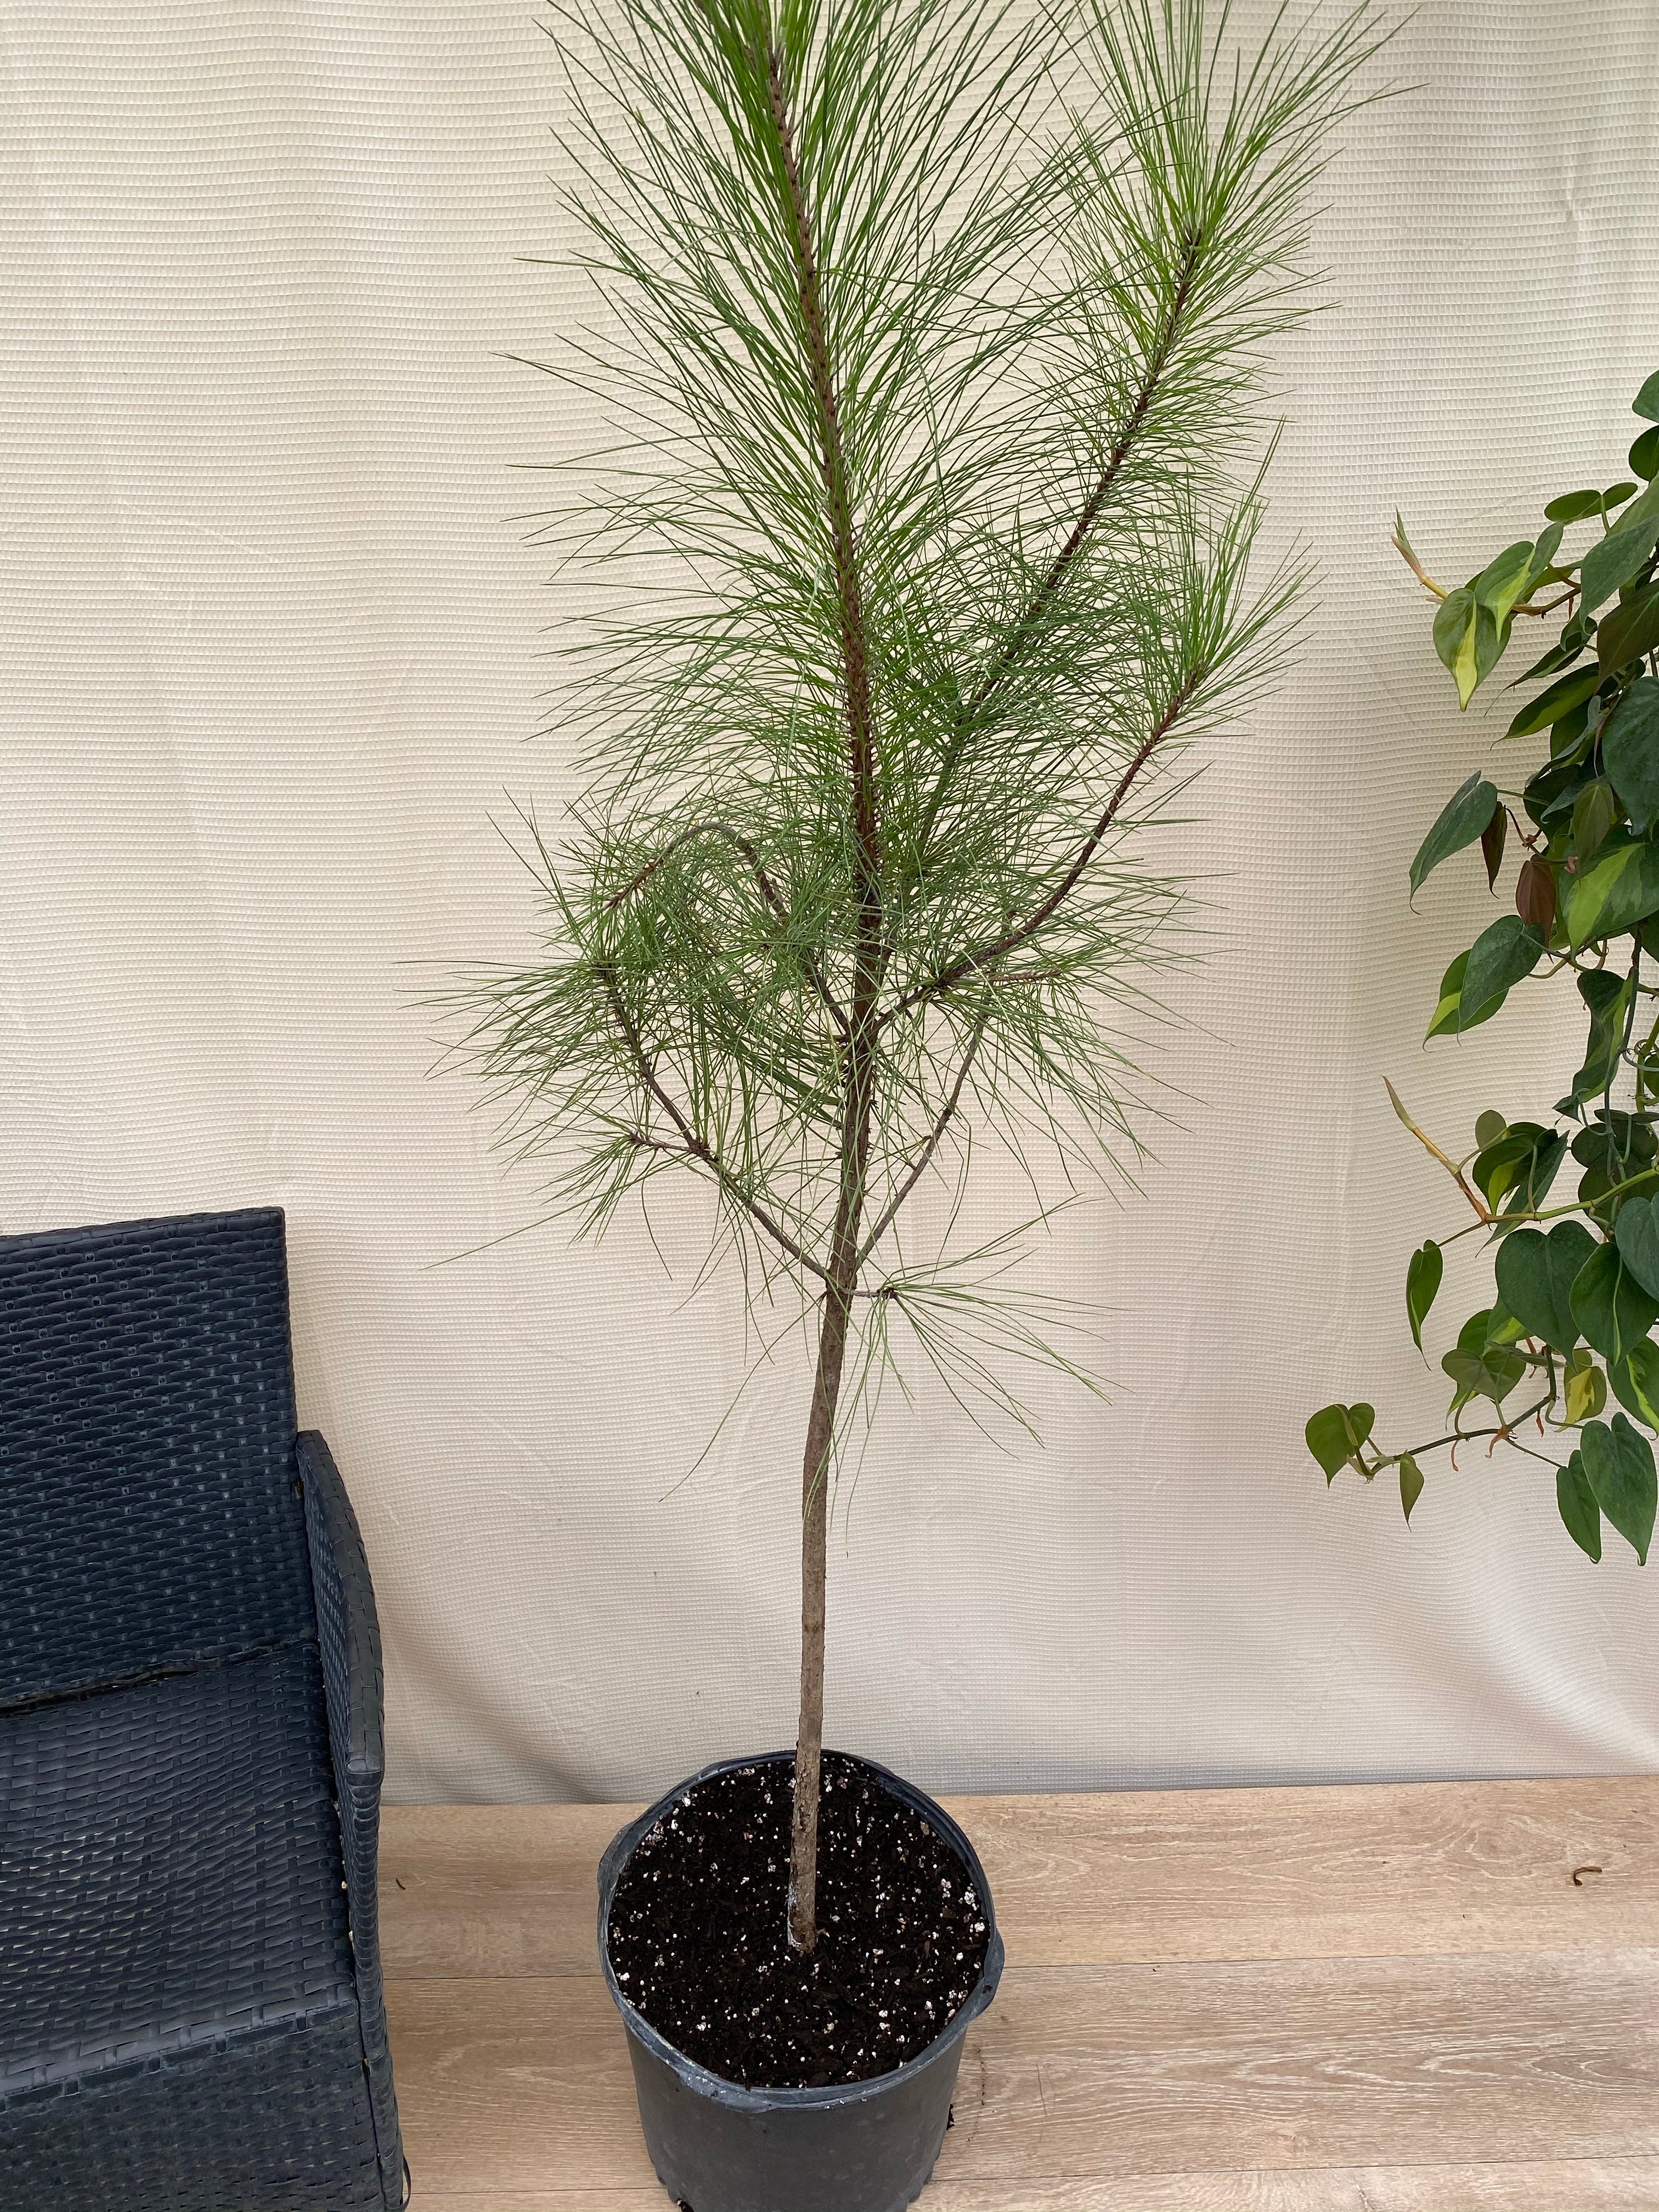 Southern Red Cedar, Juniperus silicicola inside home